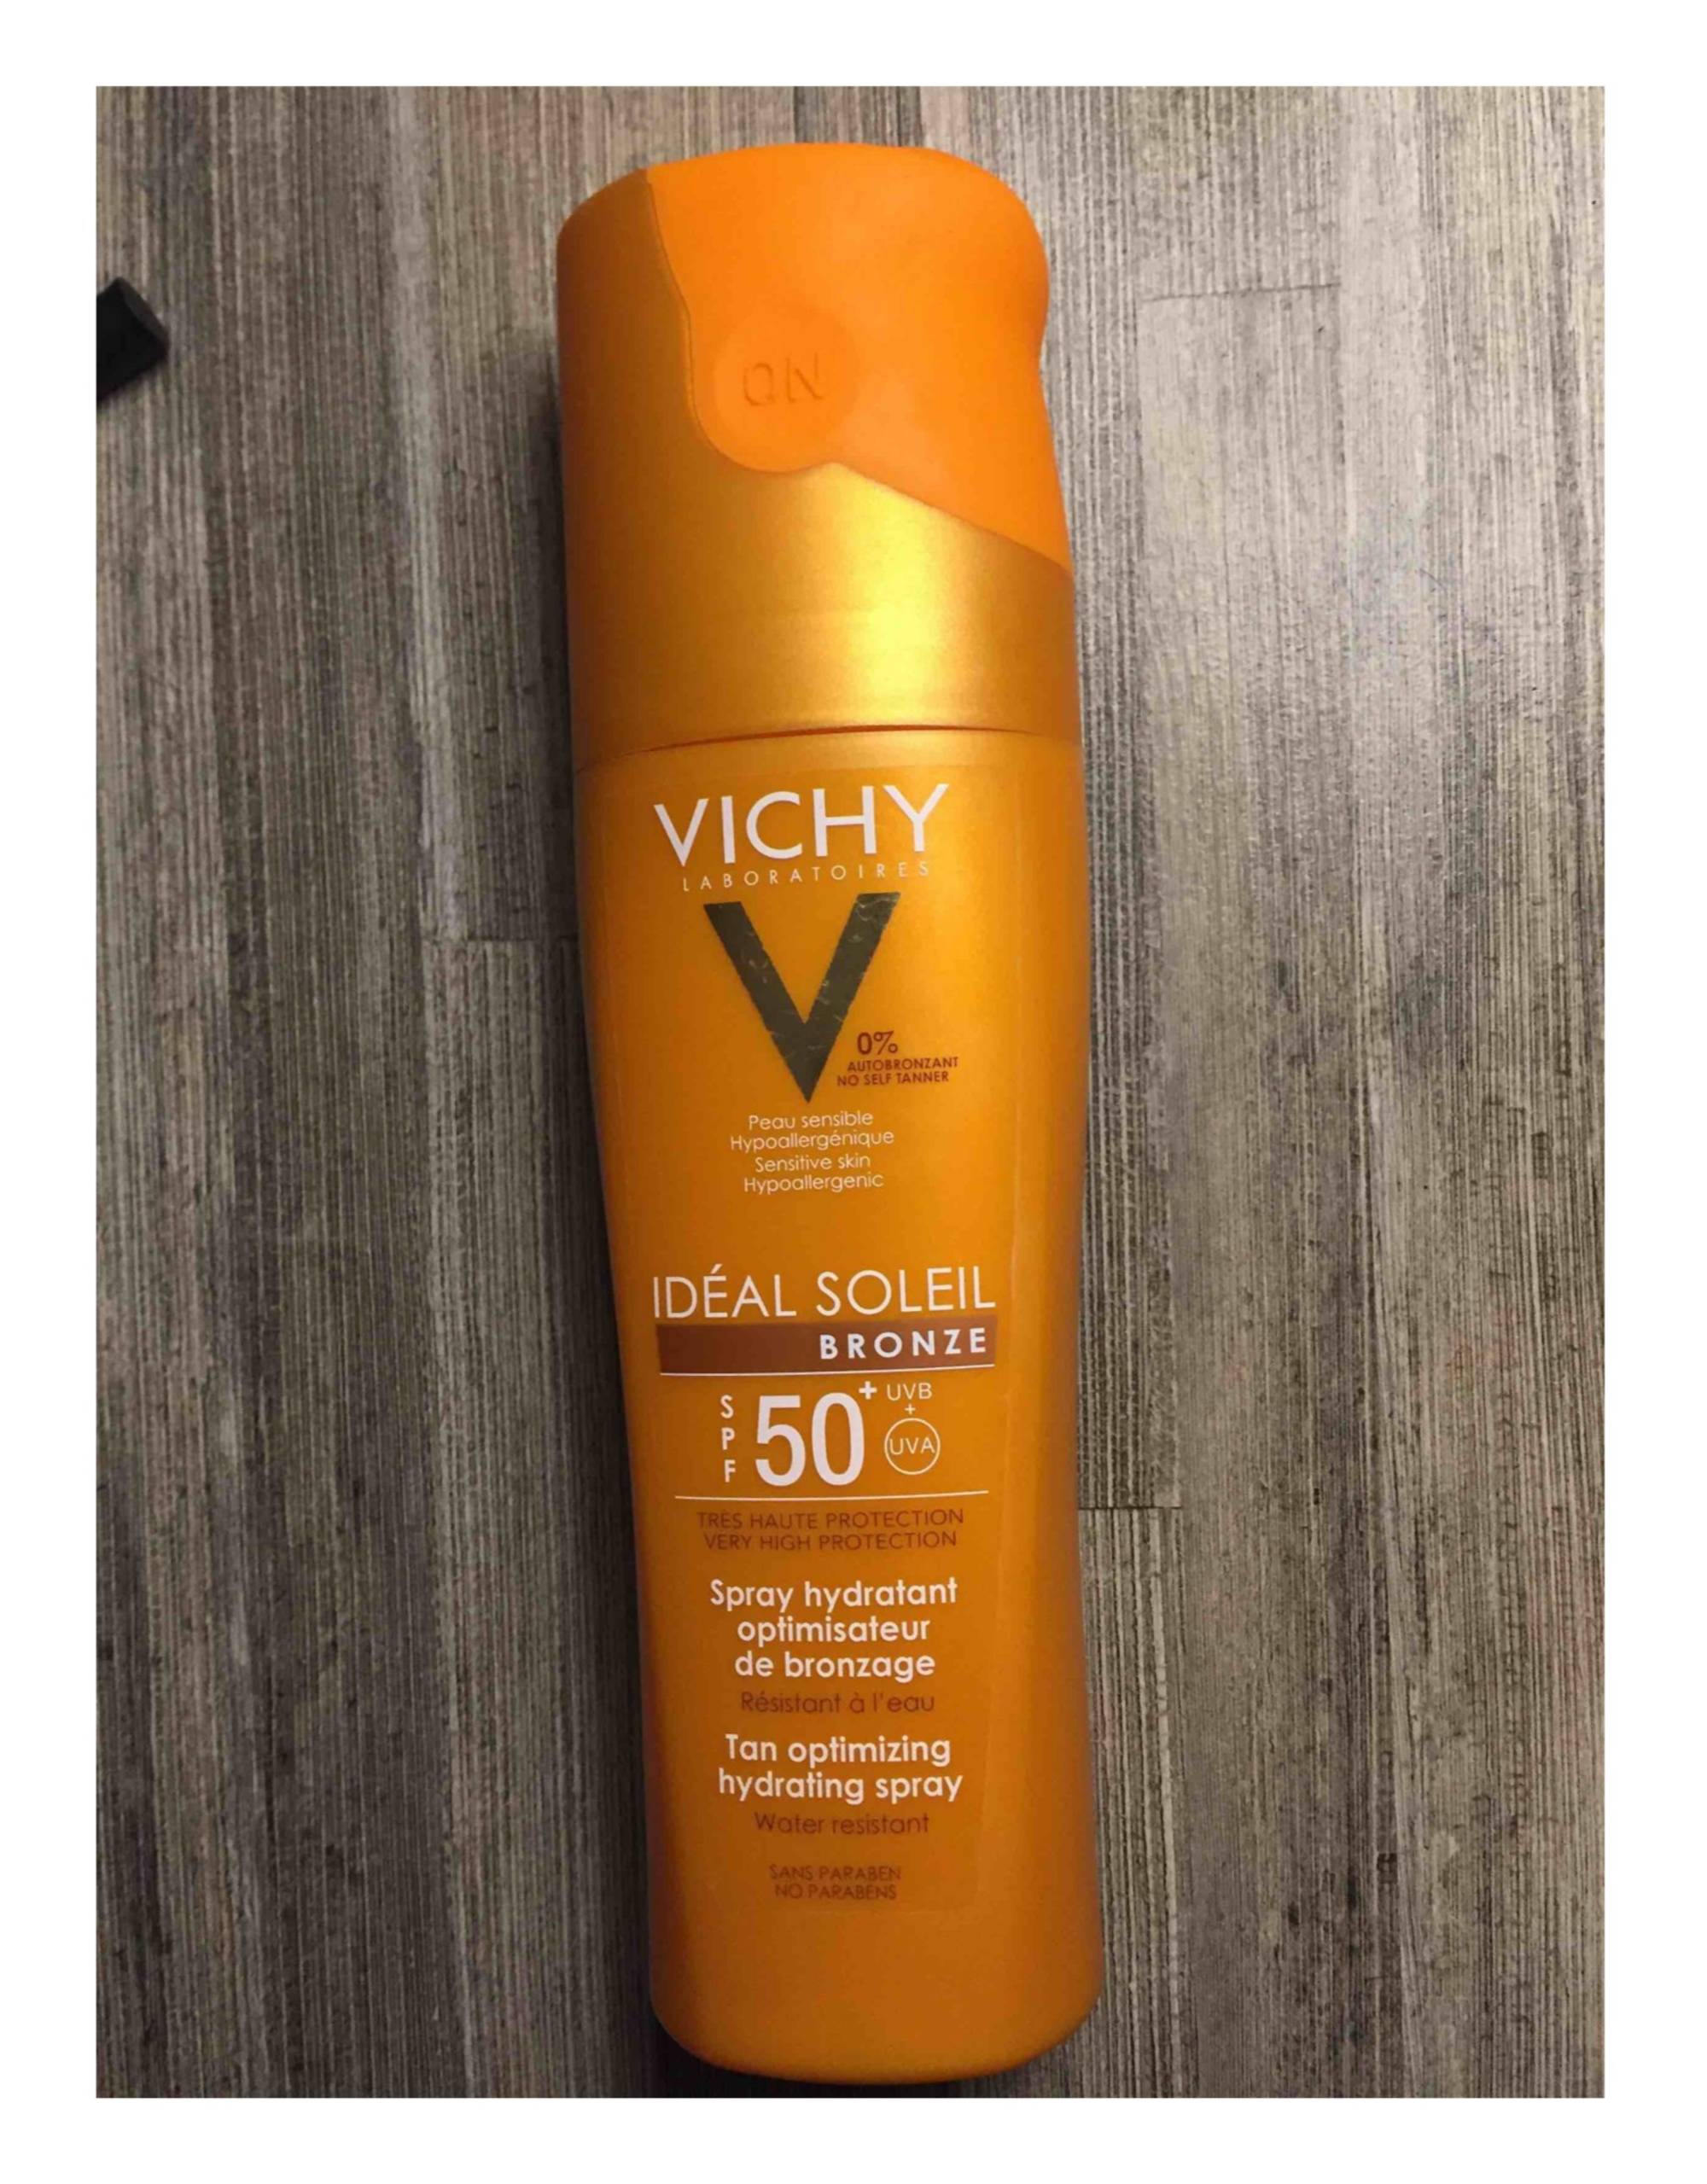 VICHY - Idéal soleil bronze spf 50+